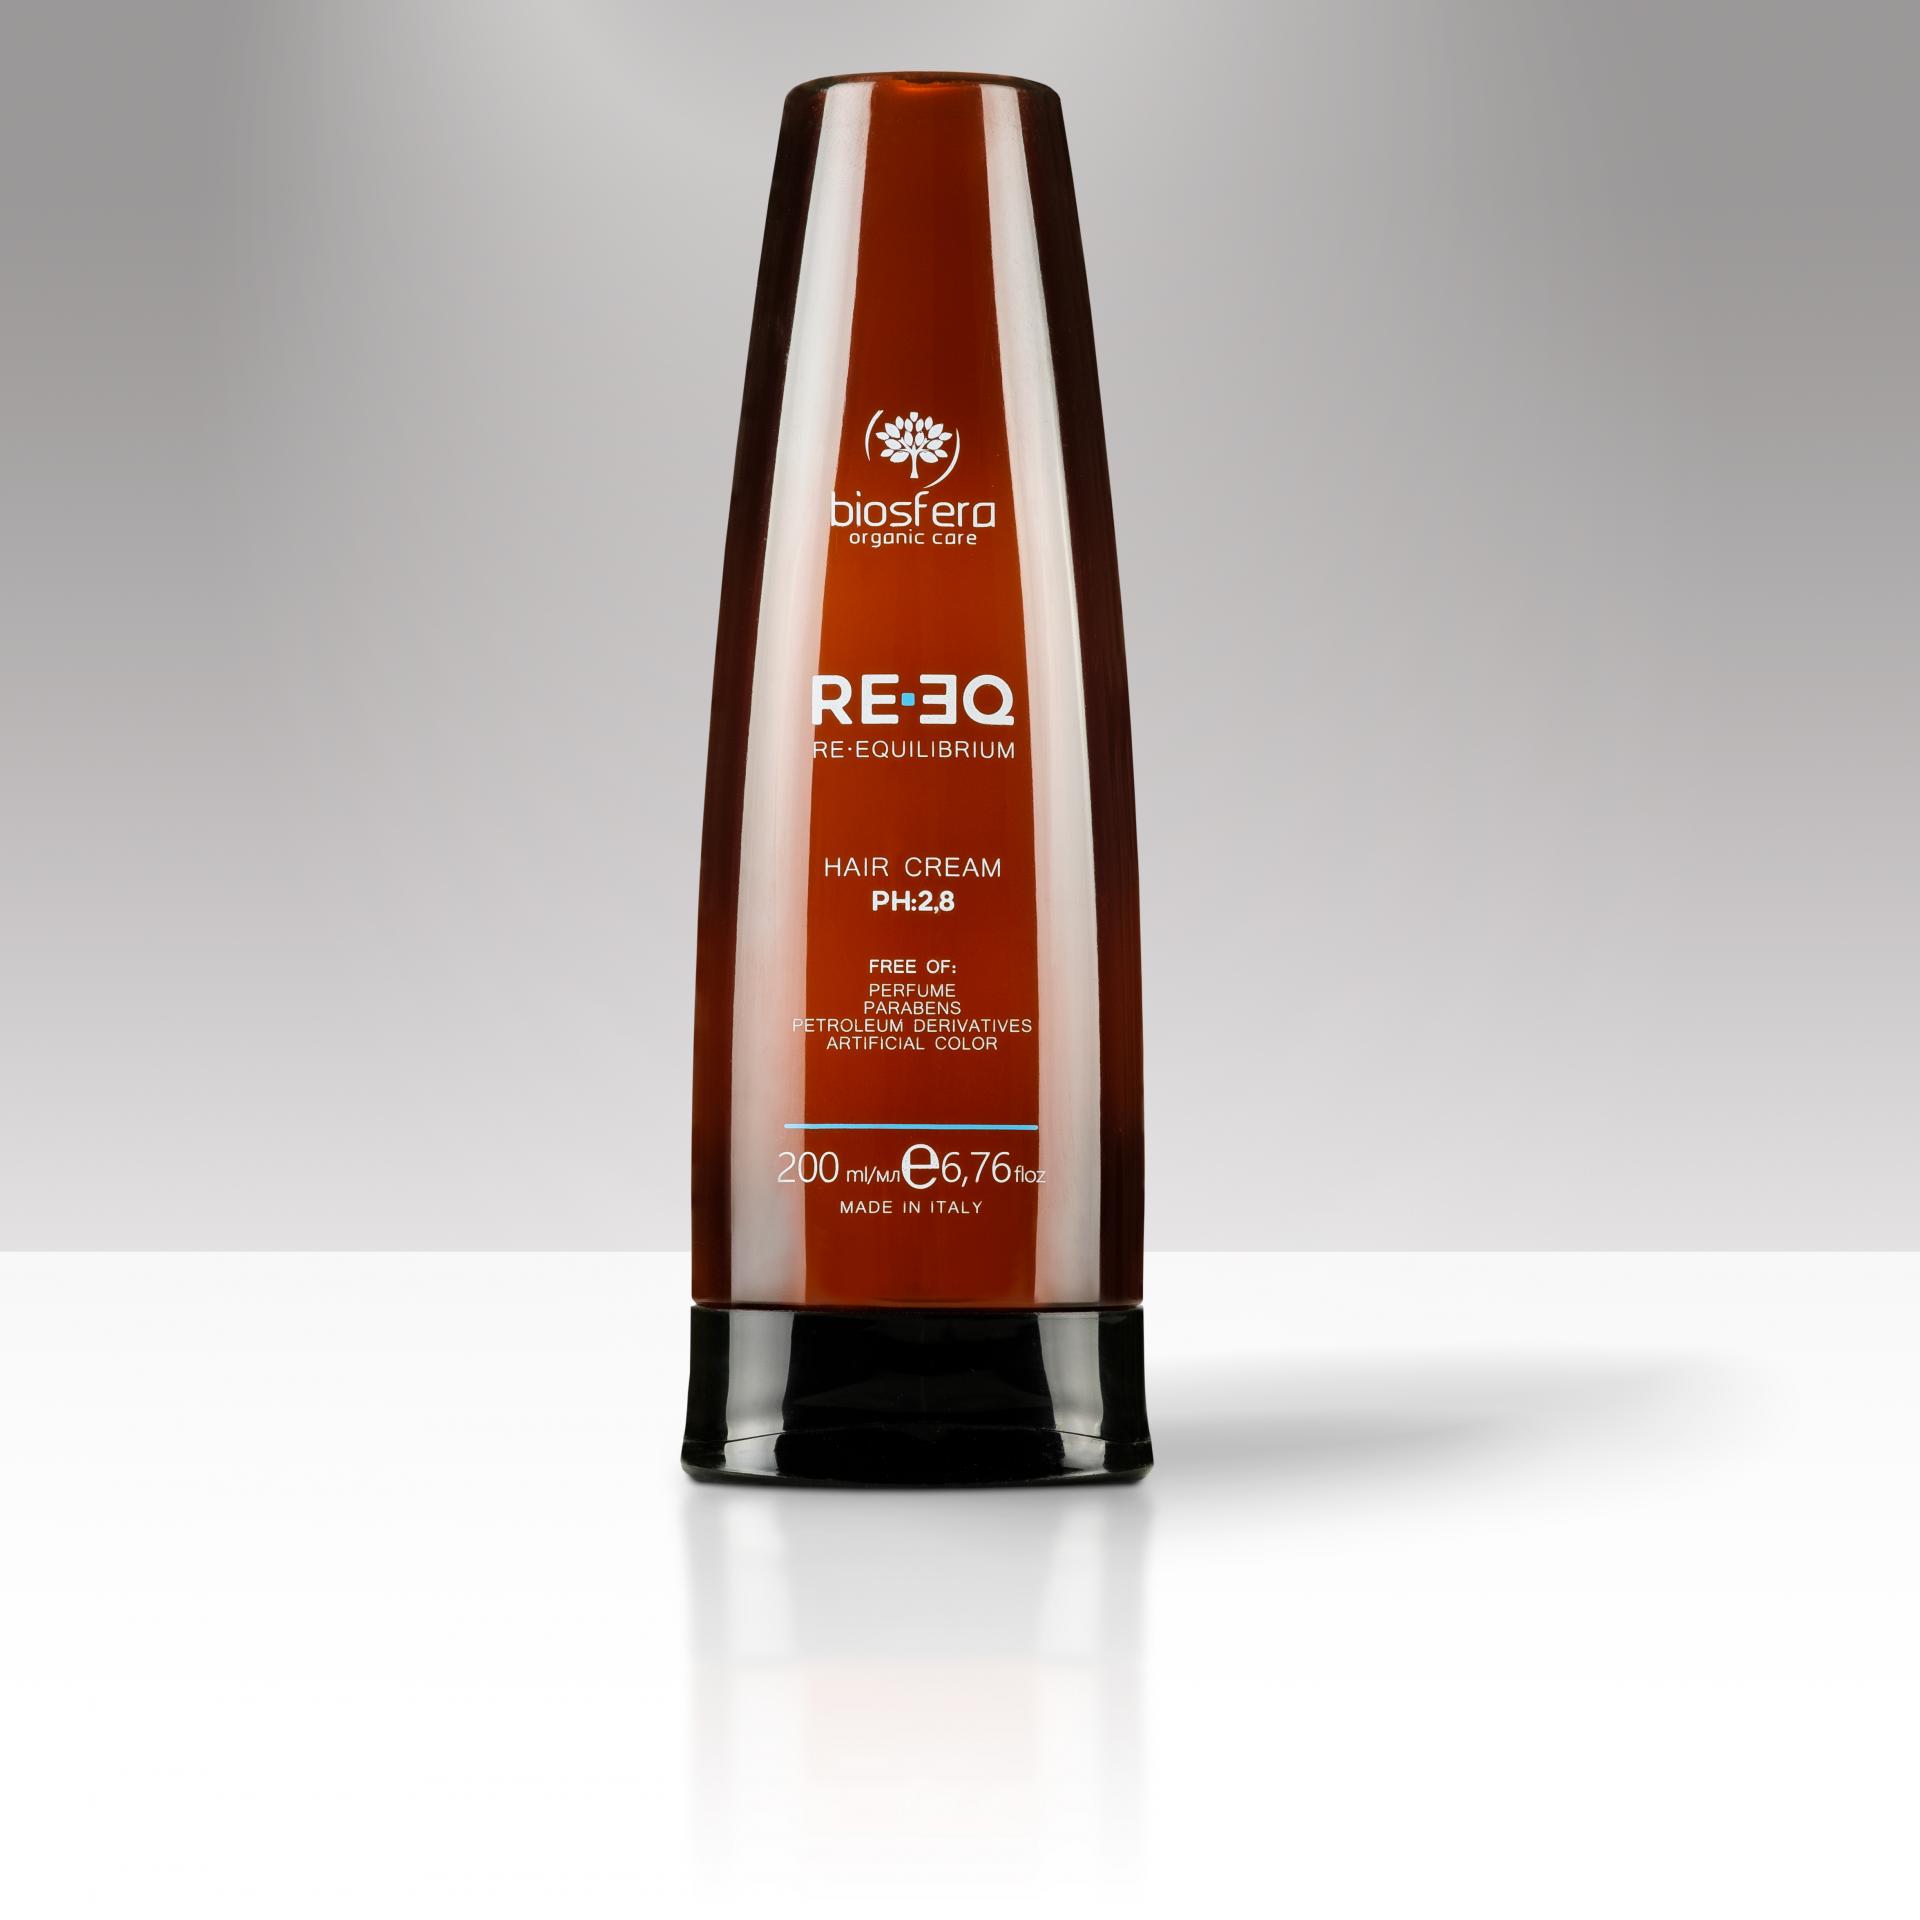 HAIR CREAM HIDRATANTE con aceite esencial de pomelo, aceite de dátil y monoi tiare Tahití 200 ml.